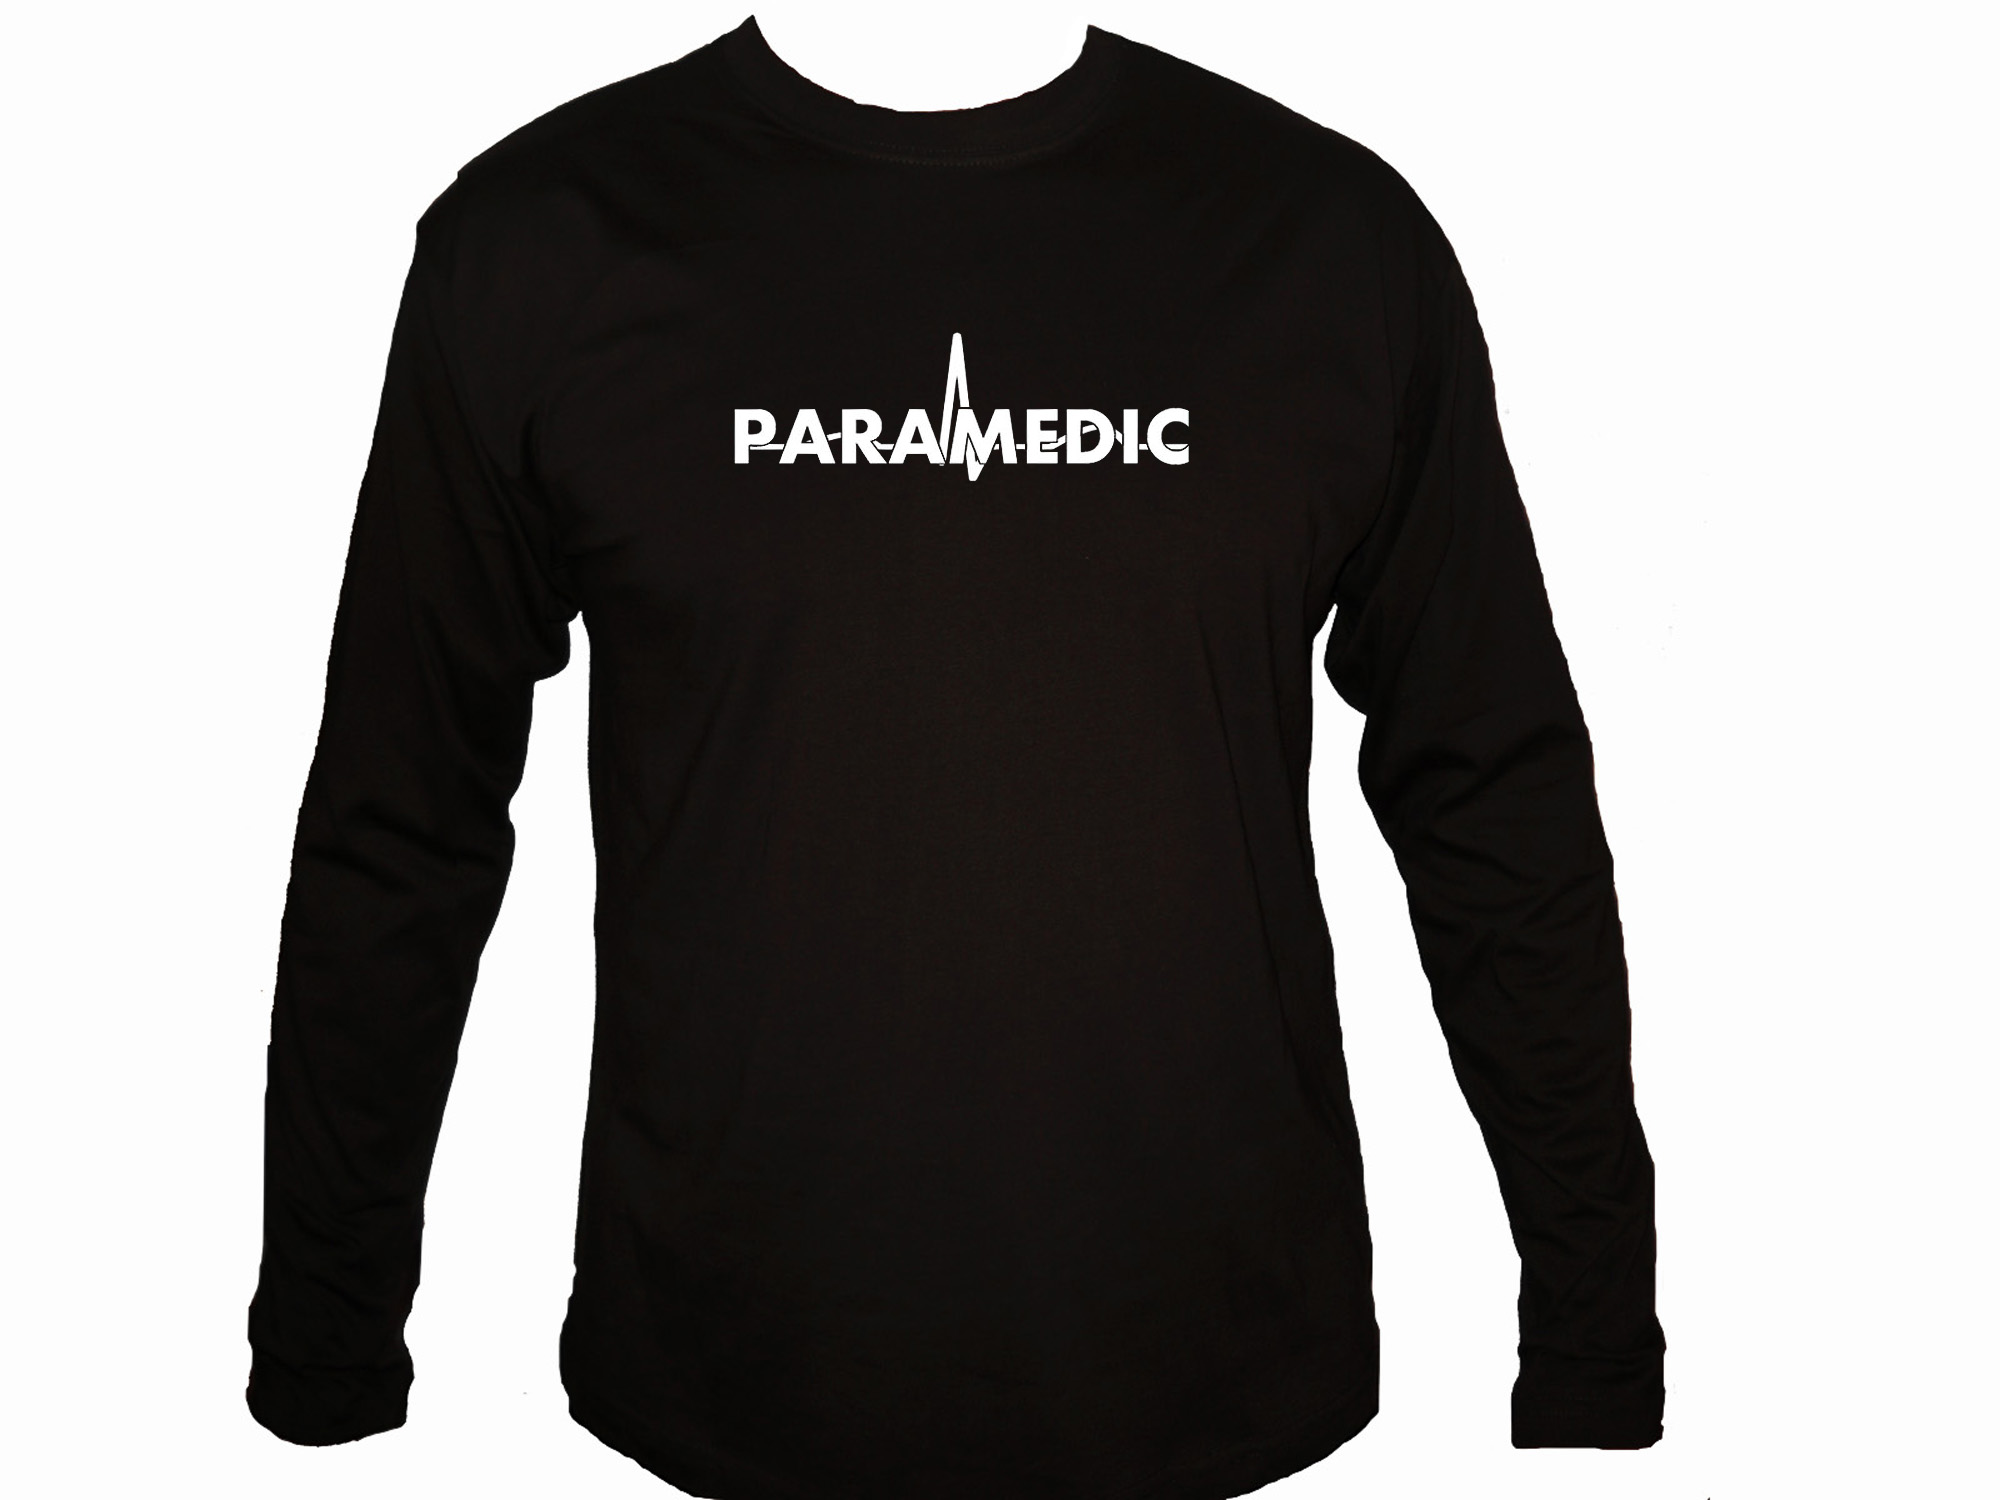 Paramedic medic customized sleeved black t-shirt